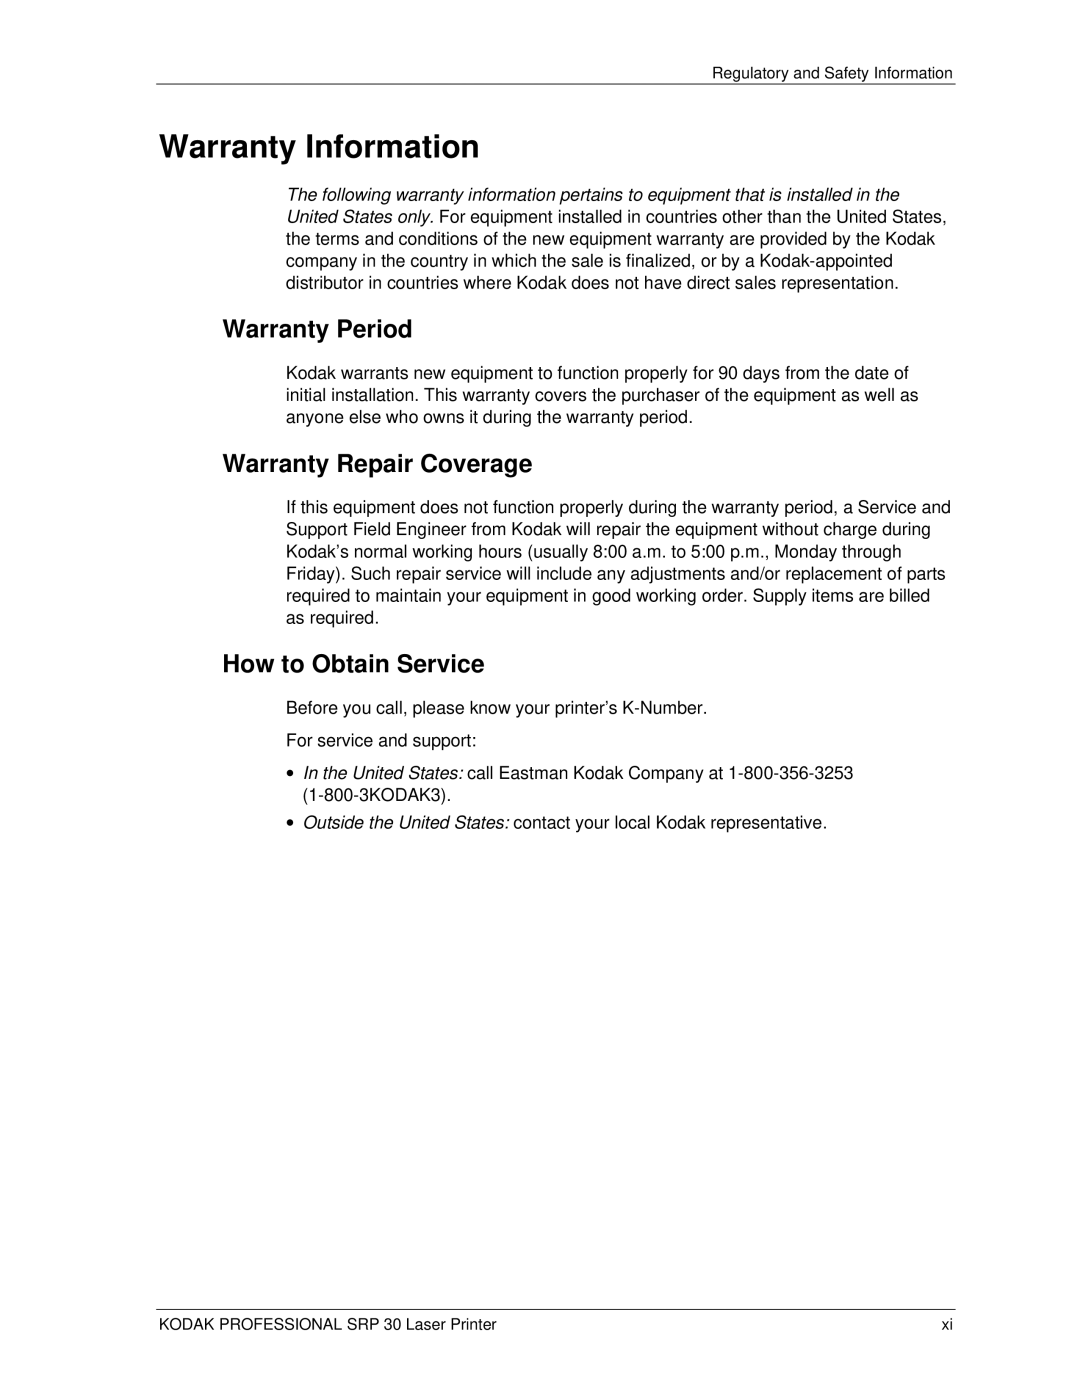 Kodak SRP 30 manual Warranty Information, Warranty Period, Warranty Repair Coverage, How to Obtain Service 